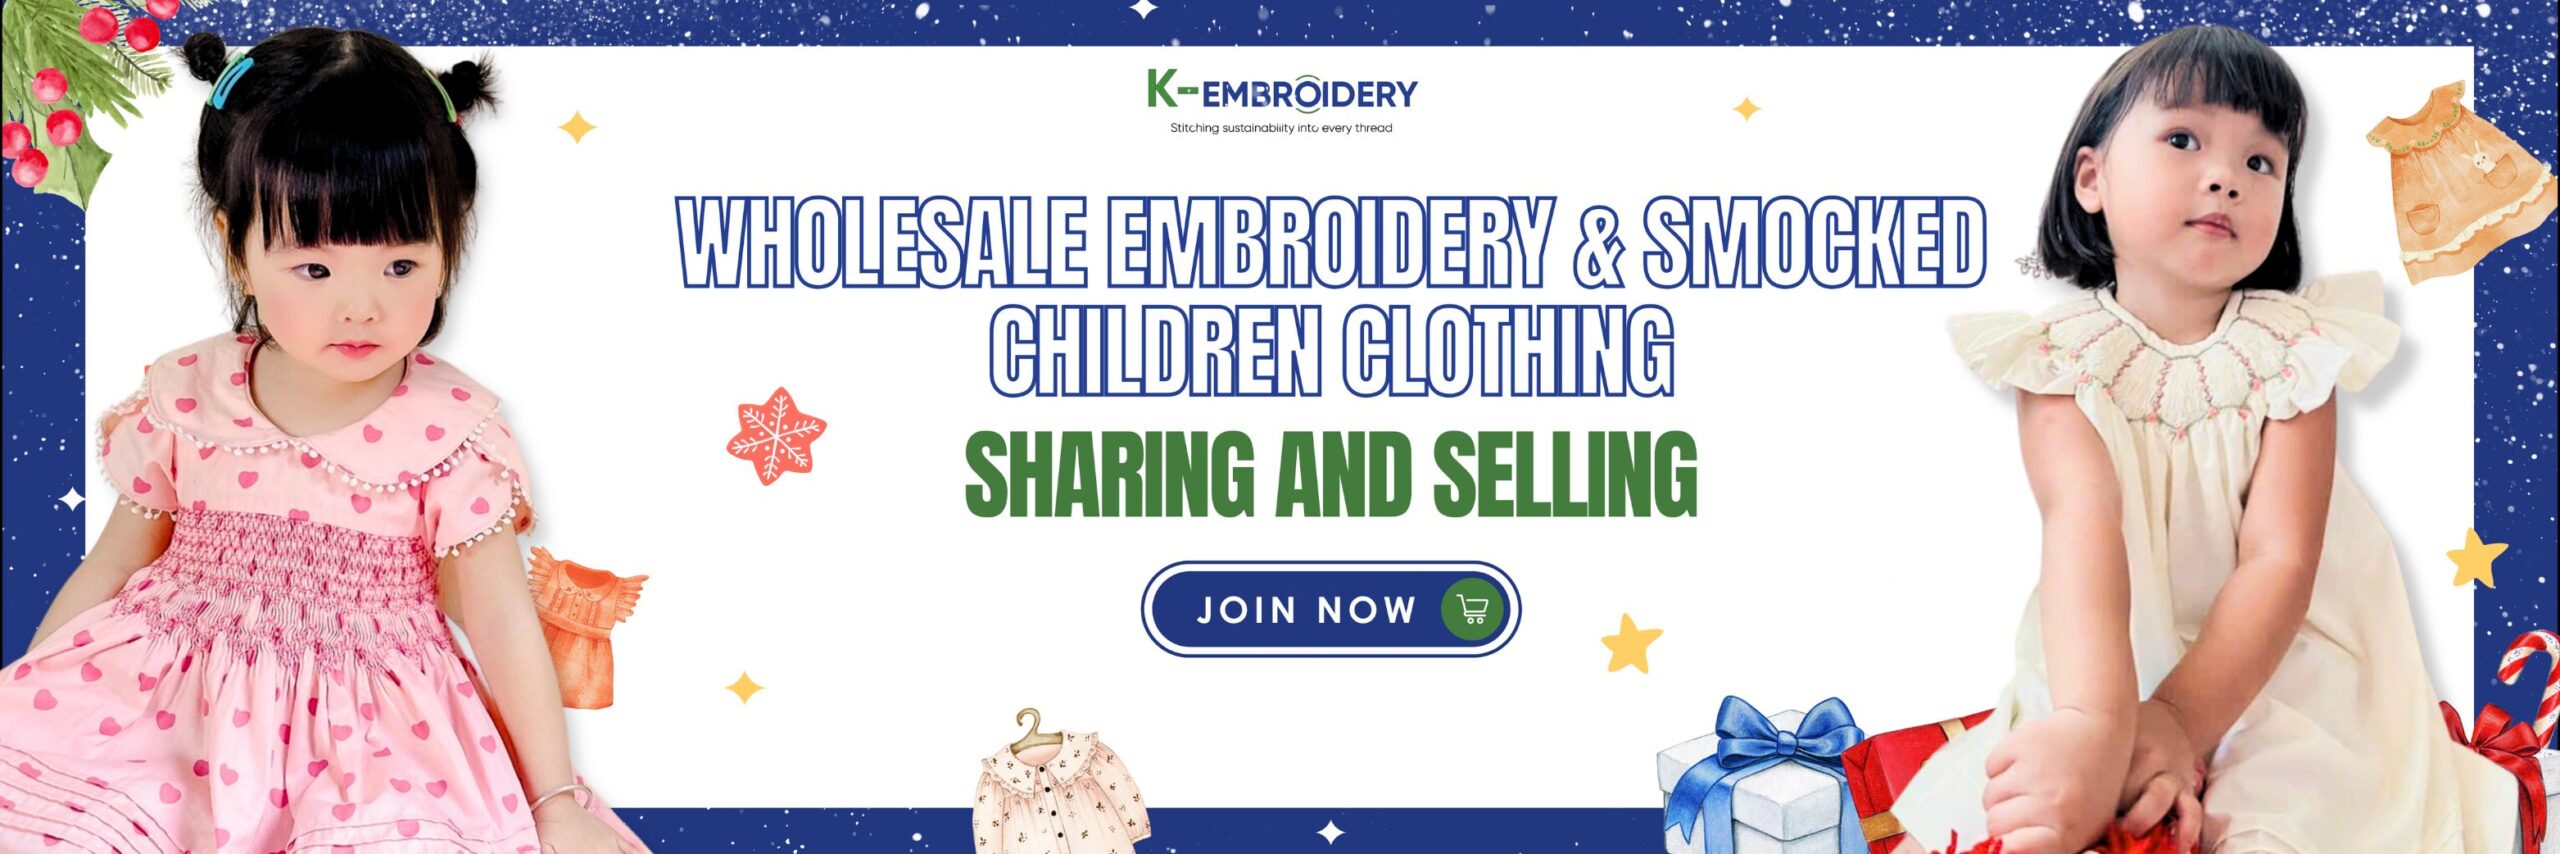 k-embroidery-wholesale-smocked-clothing